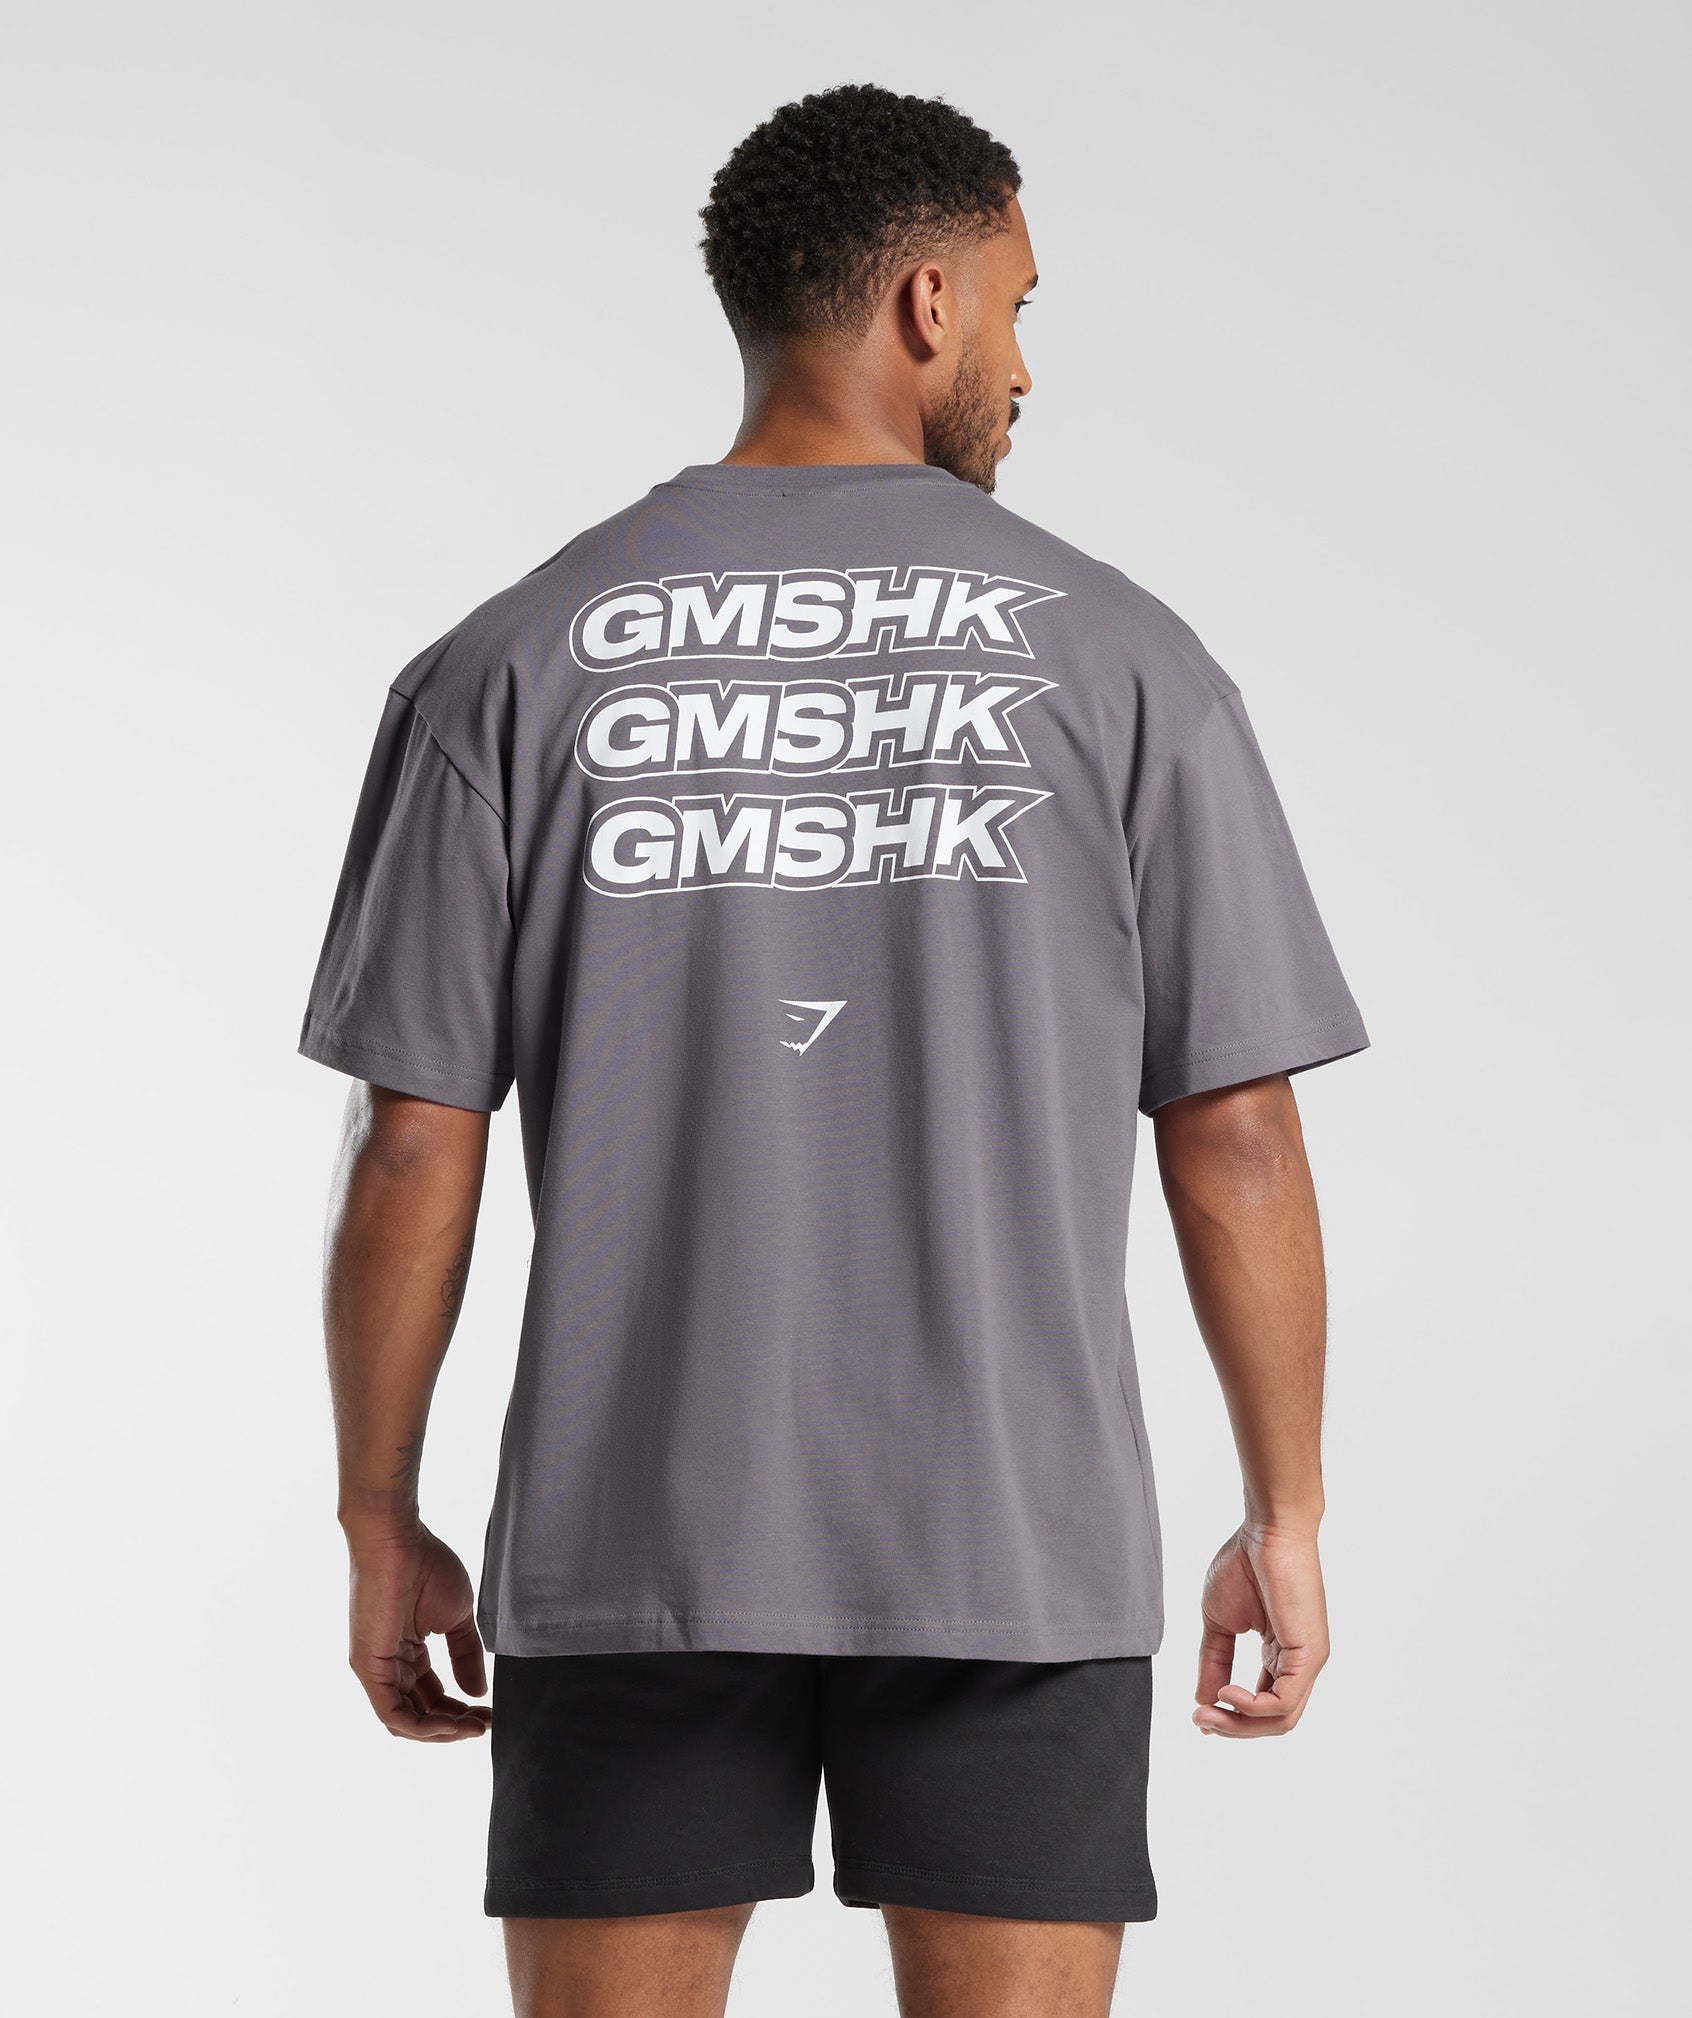 GMSHK Oversized T-Shirt in Titanium Grey - view 1